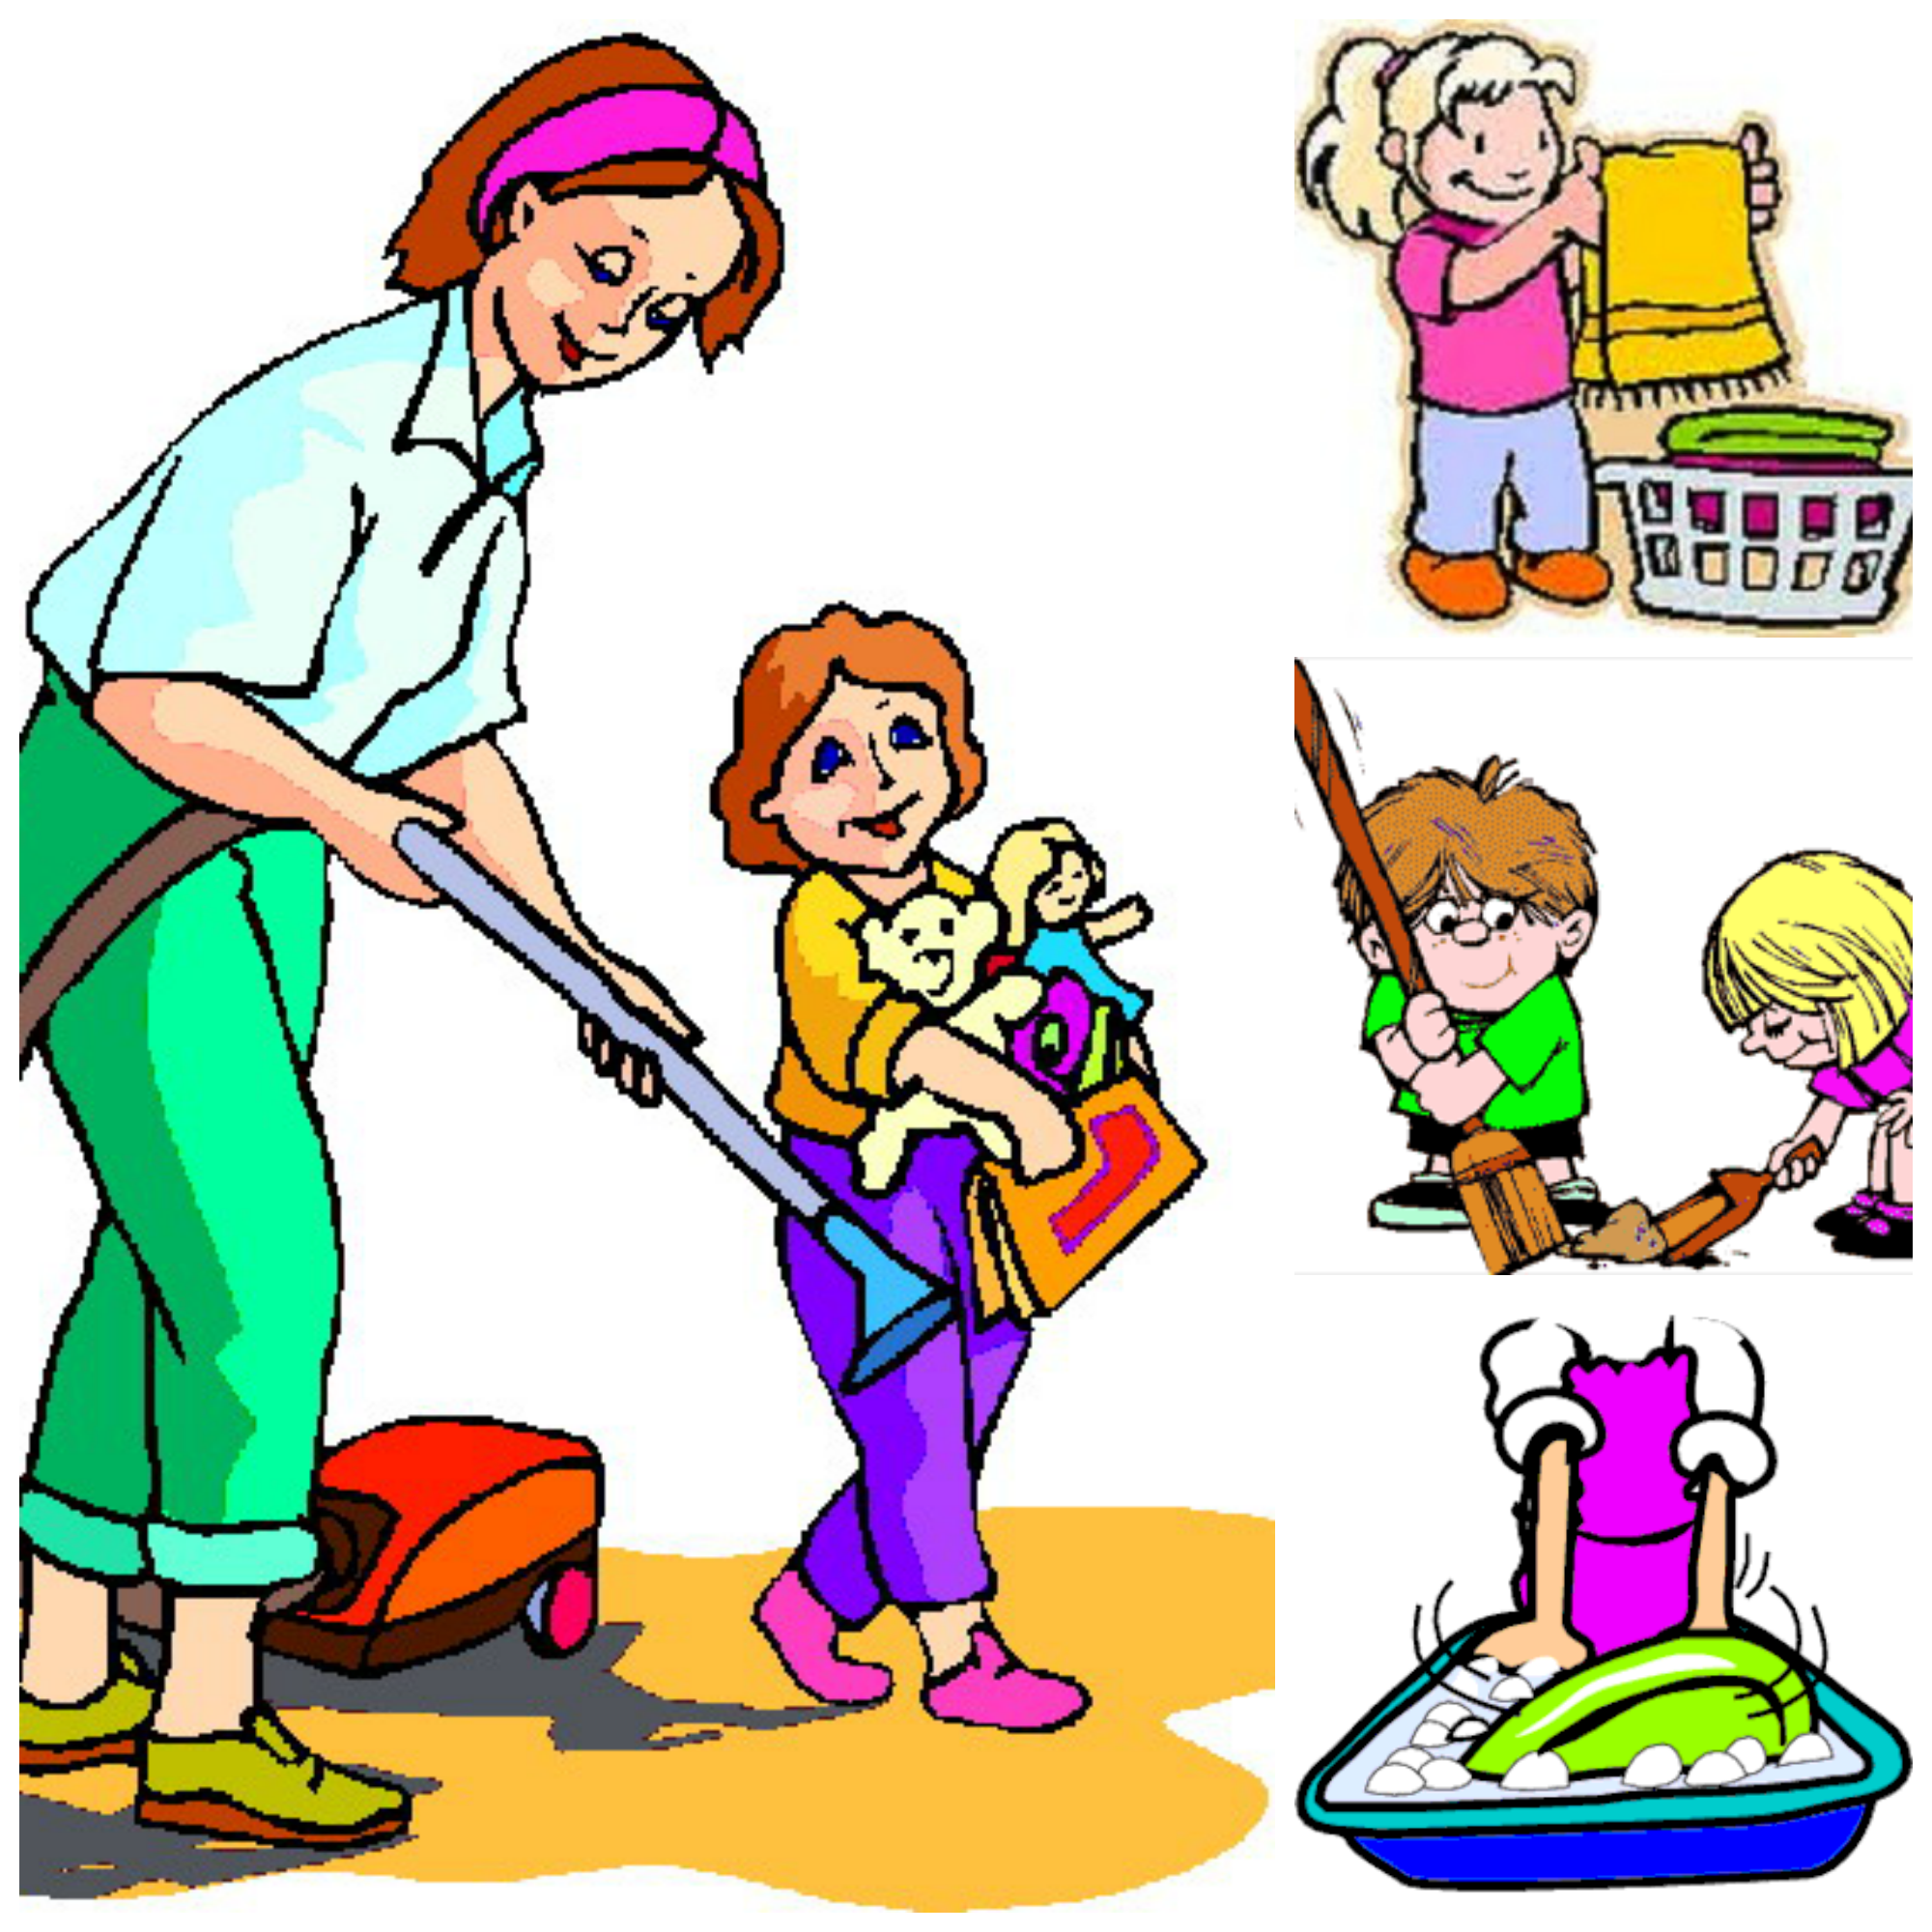 chores clipart family